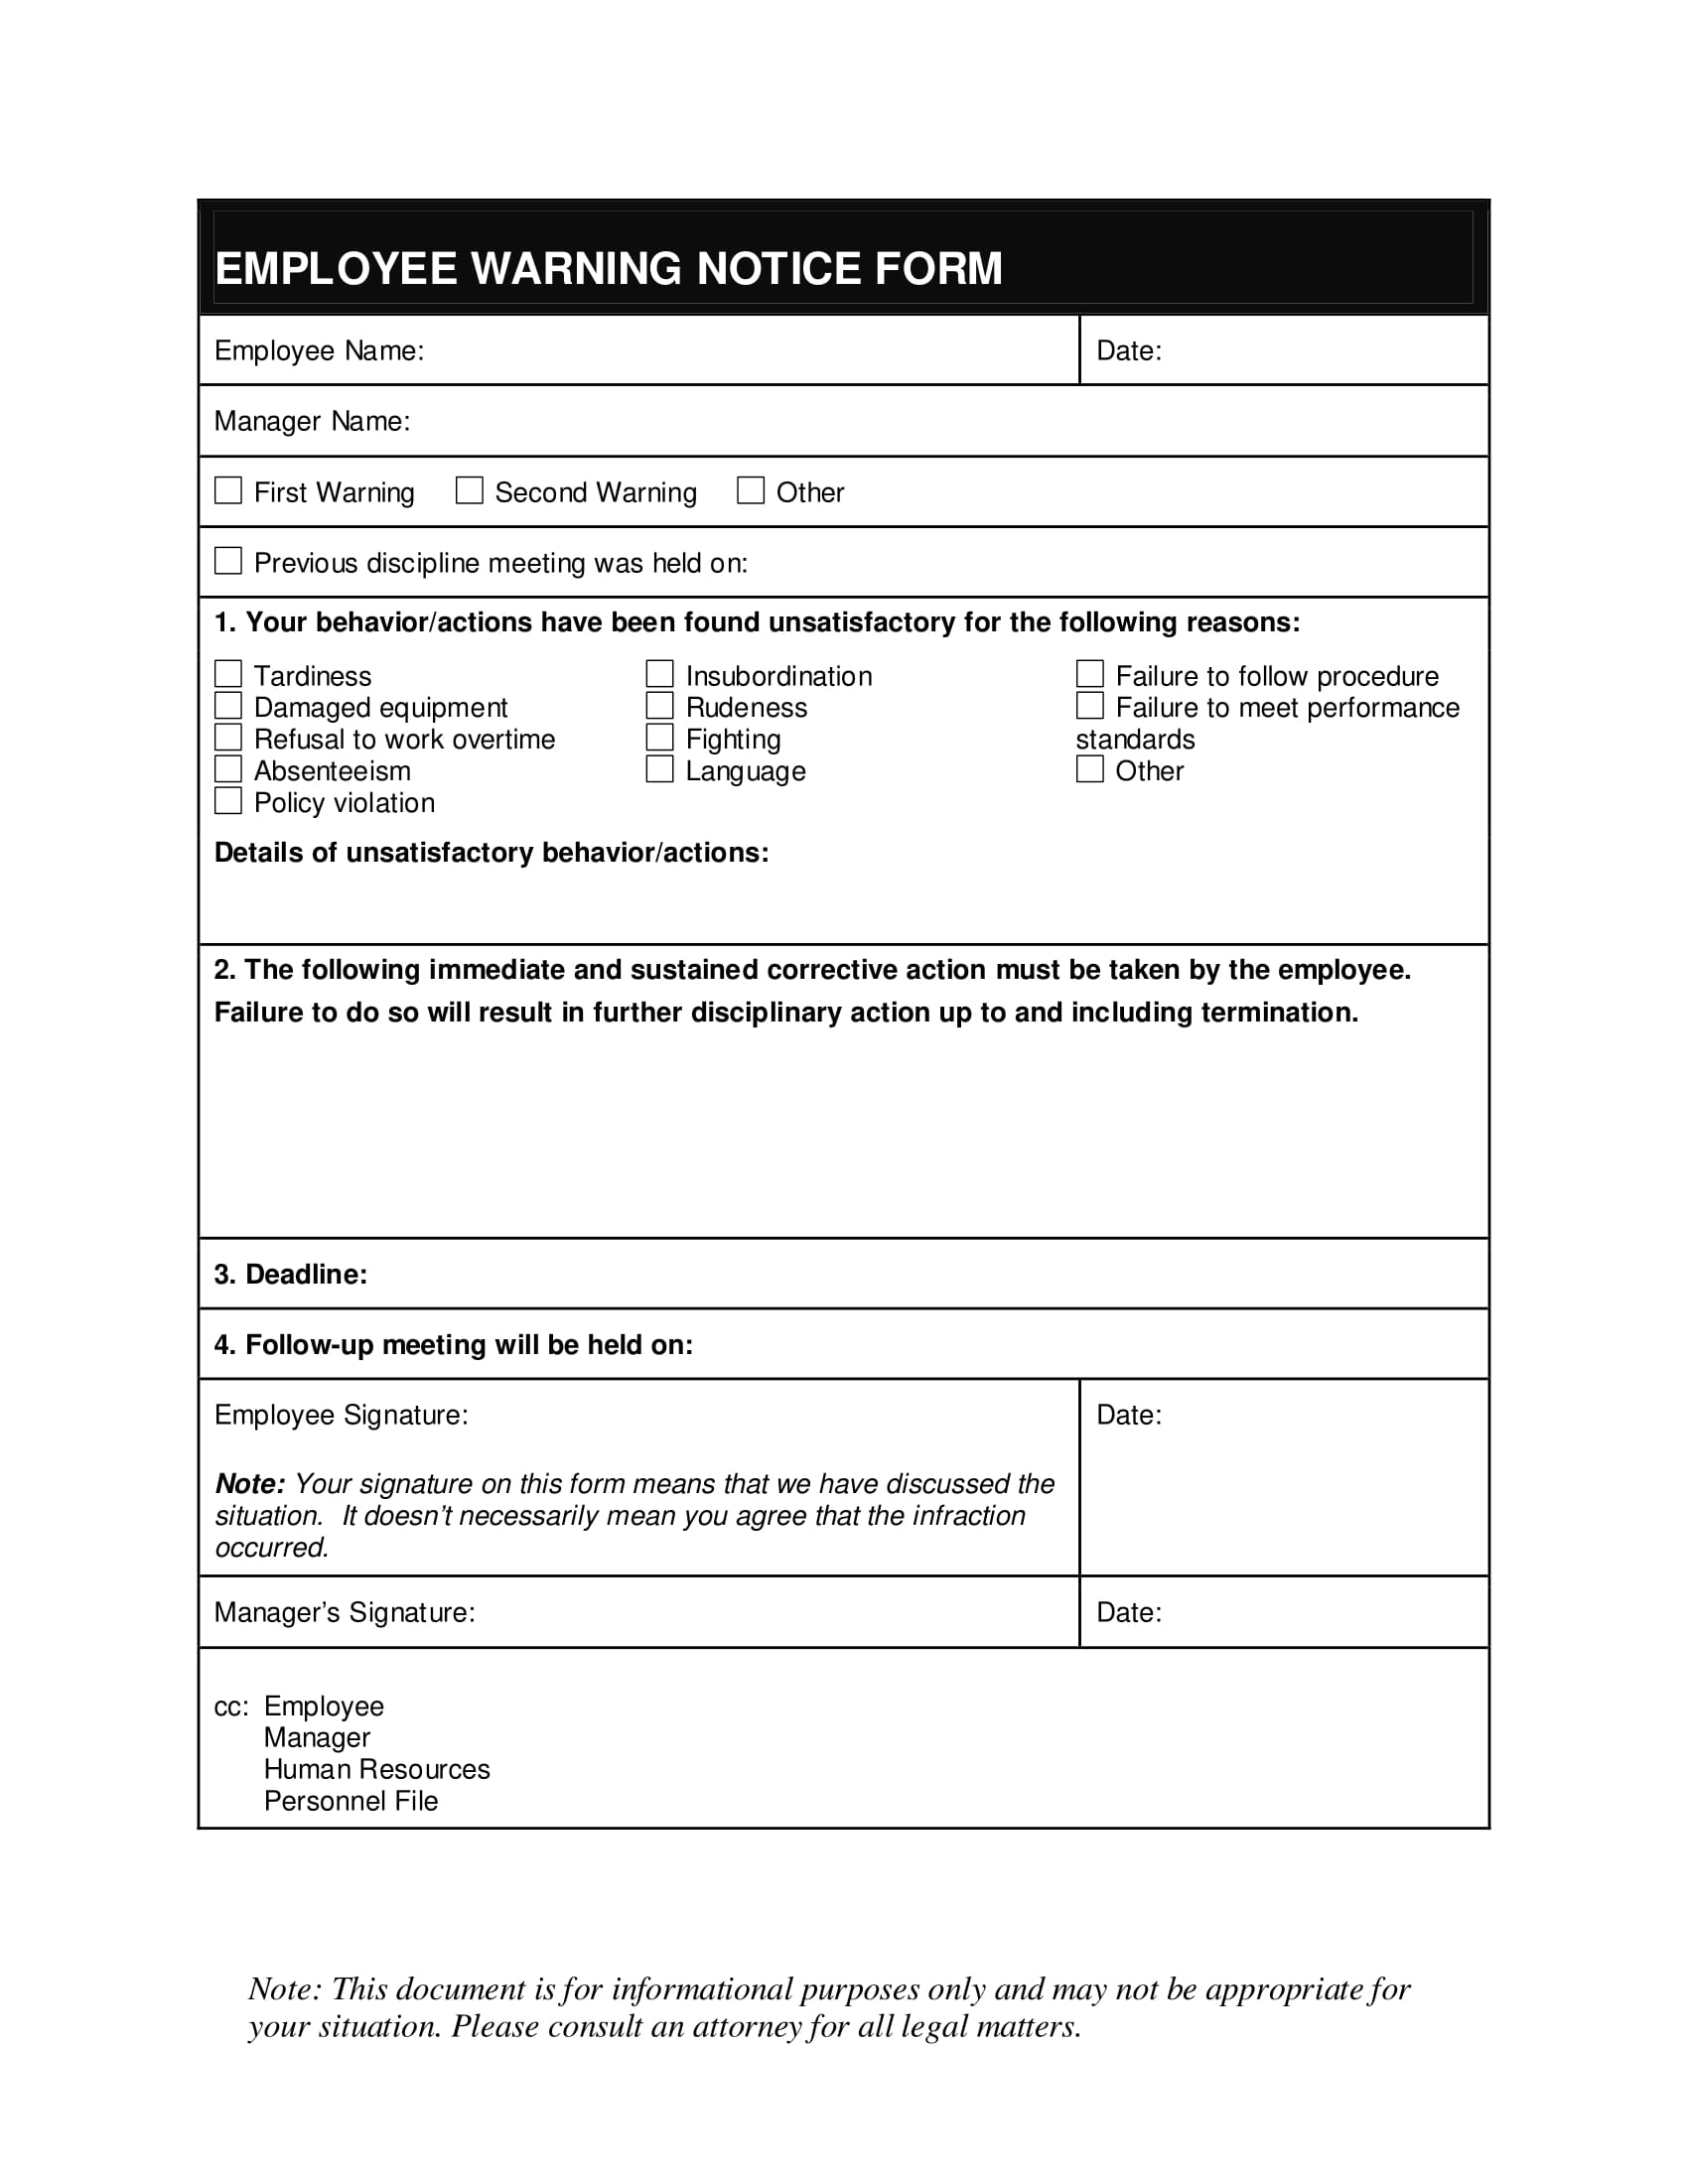 employee warning notice form 1